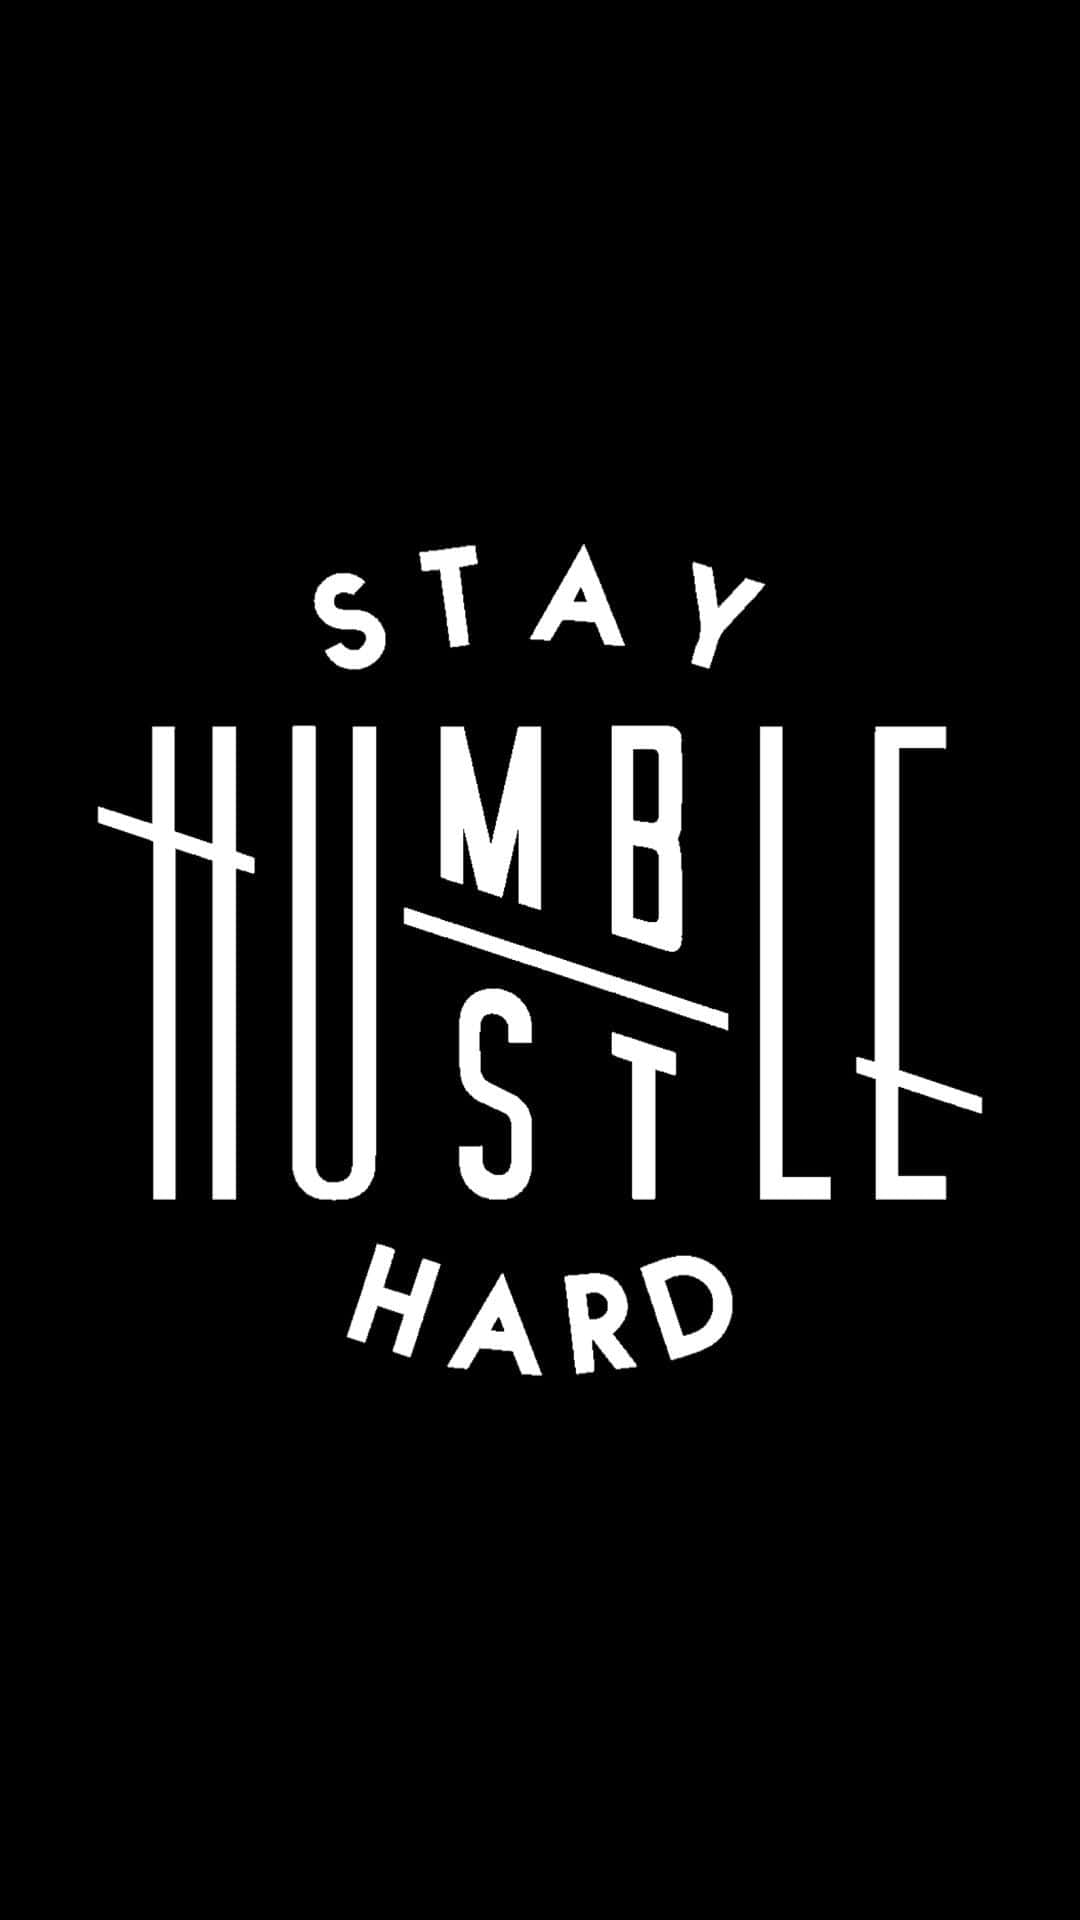 Stay Hustle Hard - Black And White Wallpaper